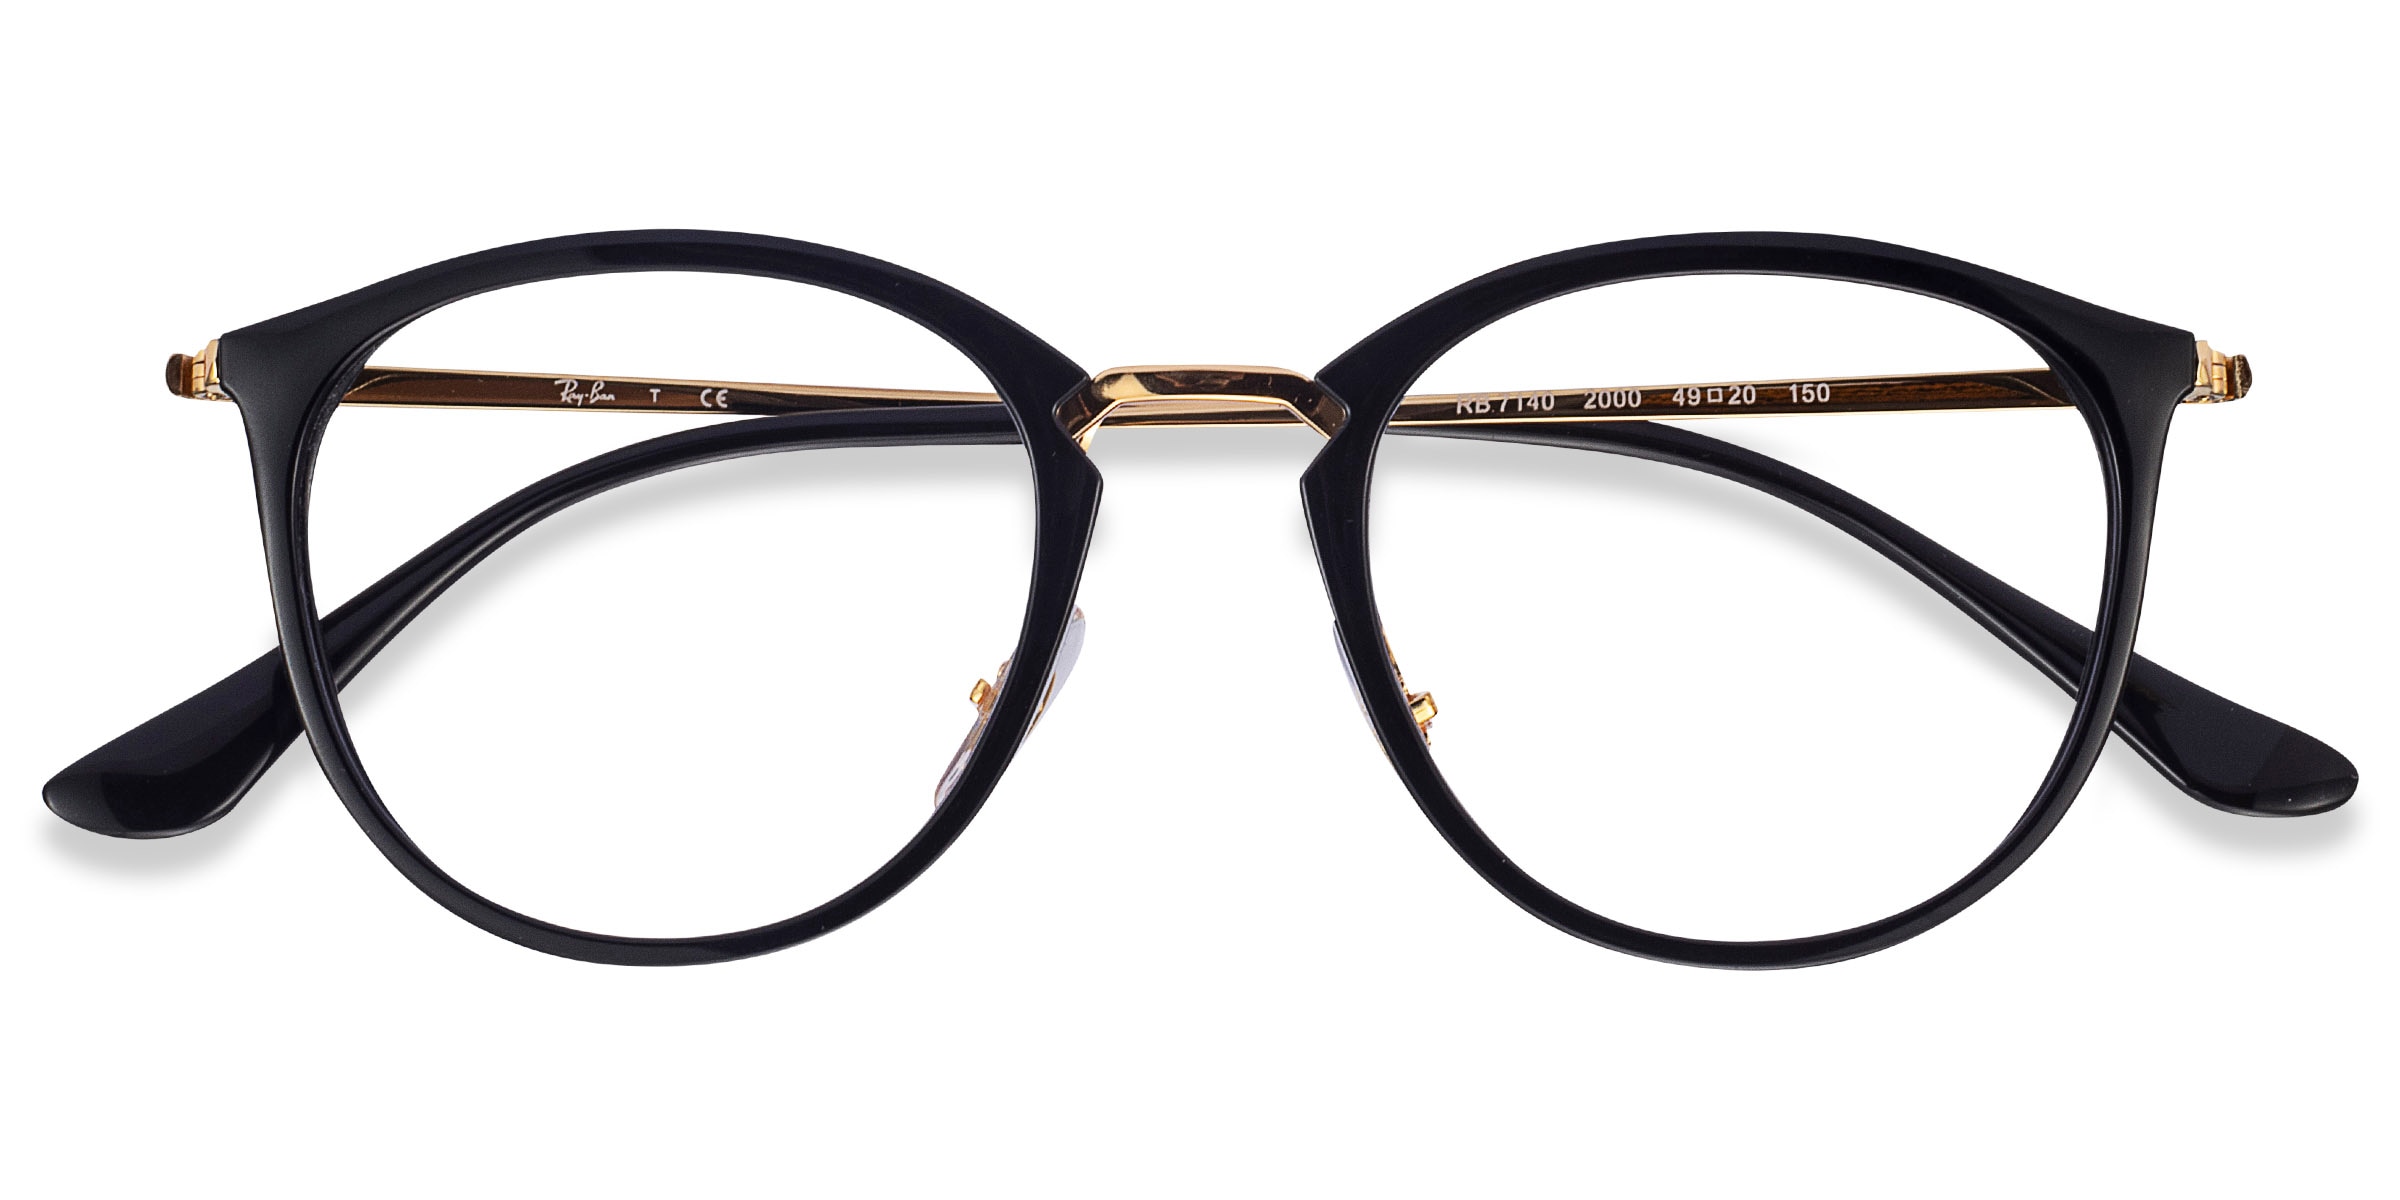 Ray-Ban RB7140 - Round Black Gold Frame Glasses For Women 